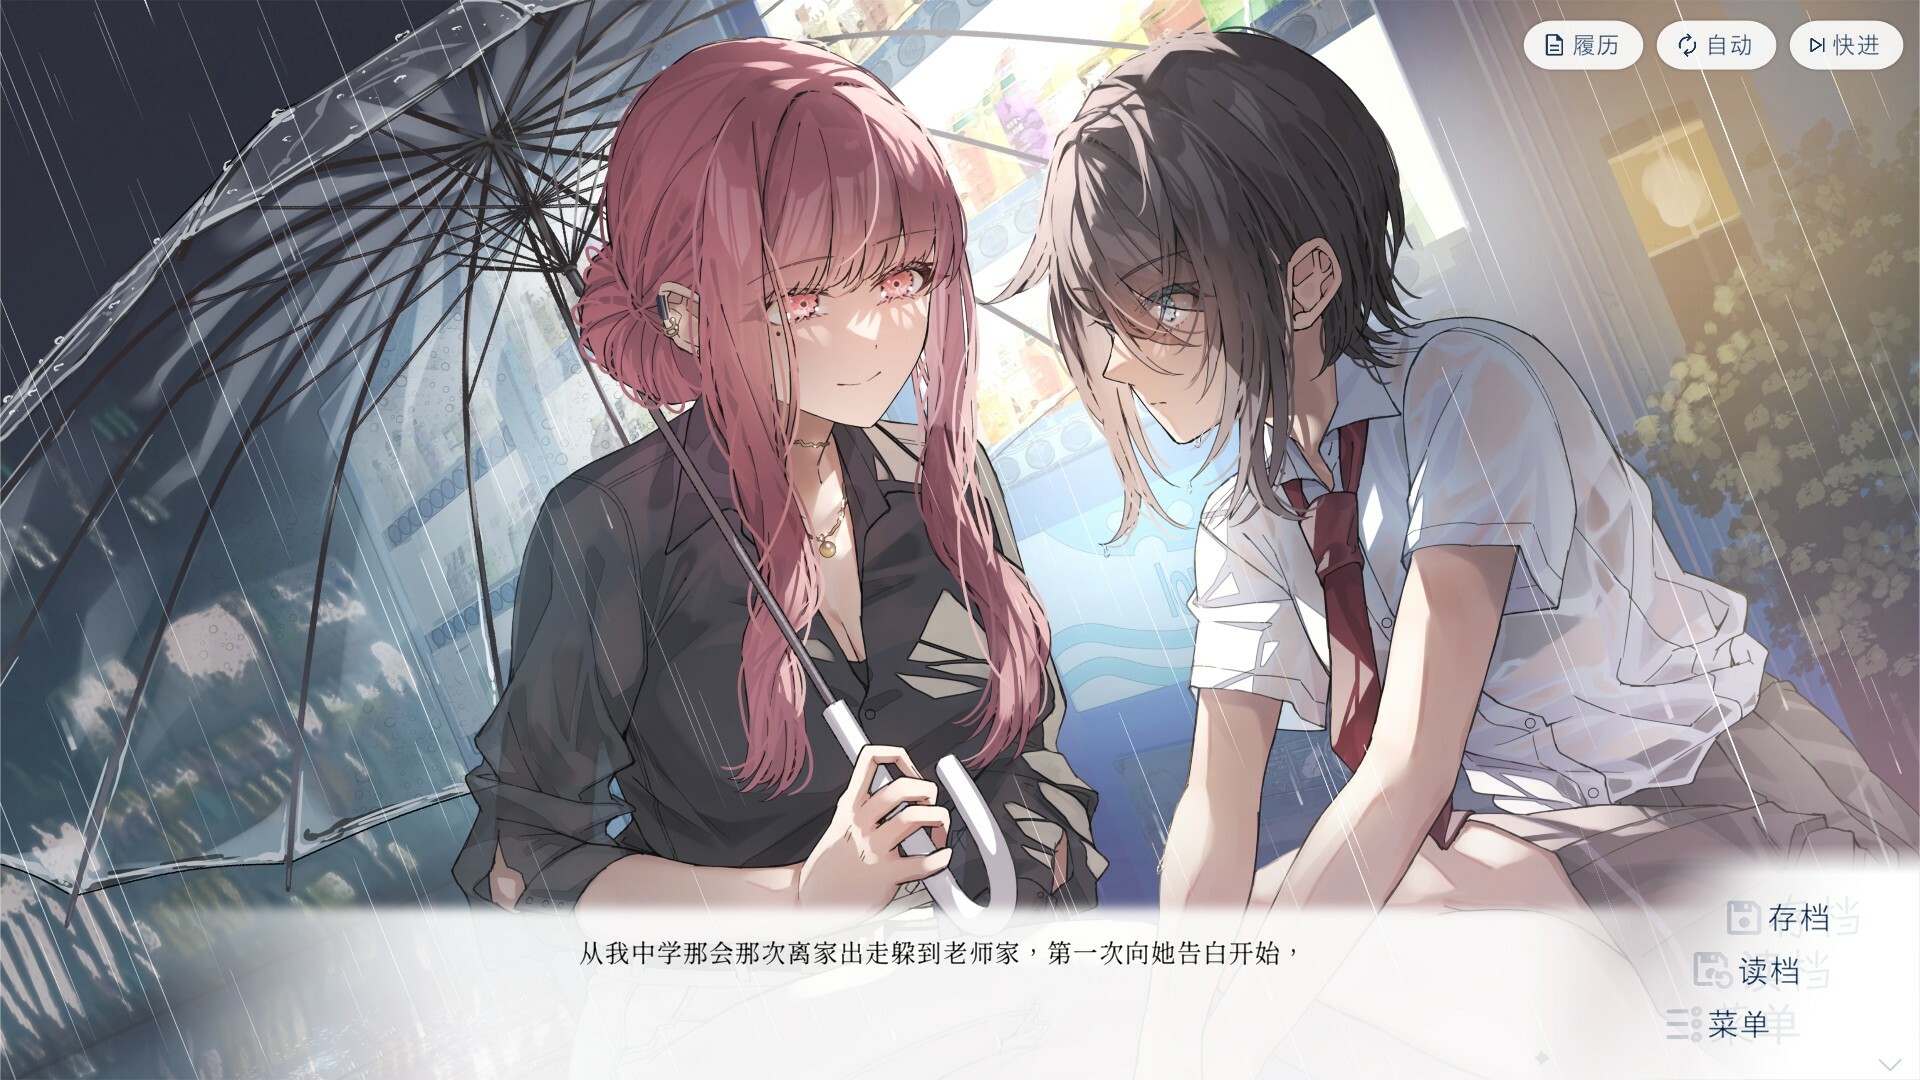 始于谎言的夏日恋情/UsoNatsu The Summer Romance Bloomed From A Lie配图9